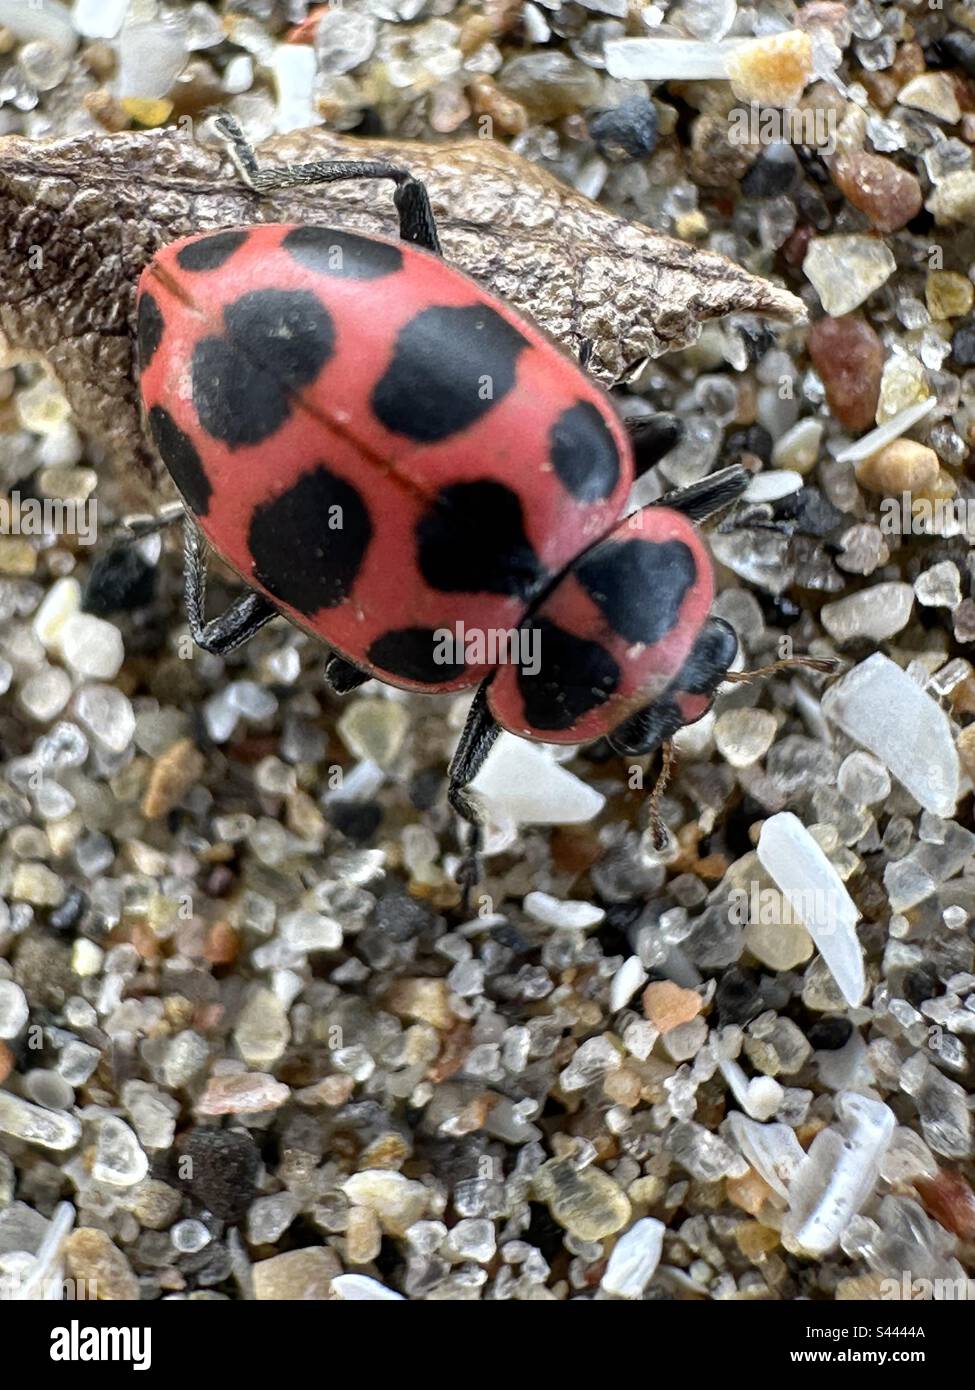 Ladybug up close in the sand Stock Photo